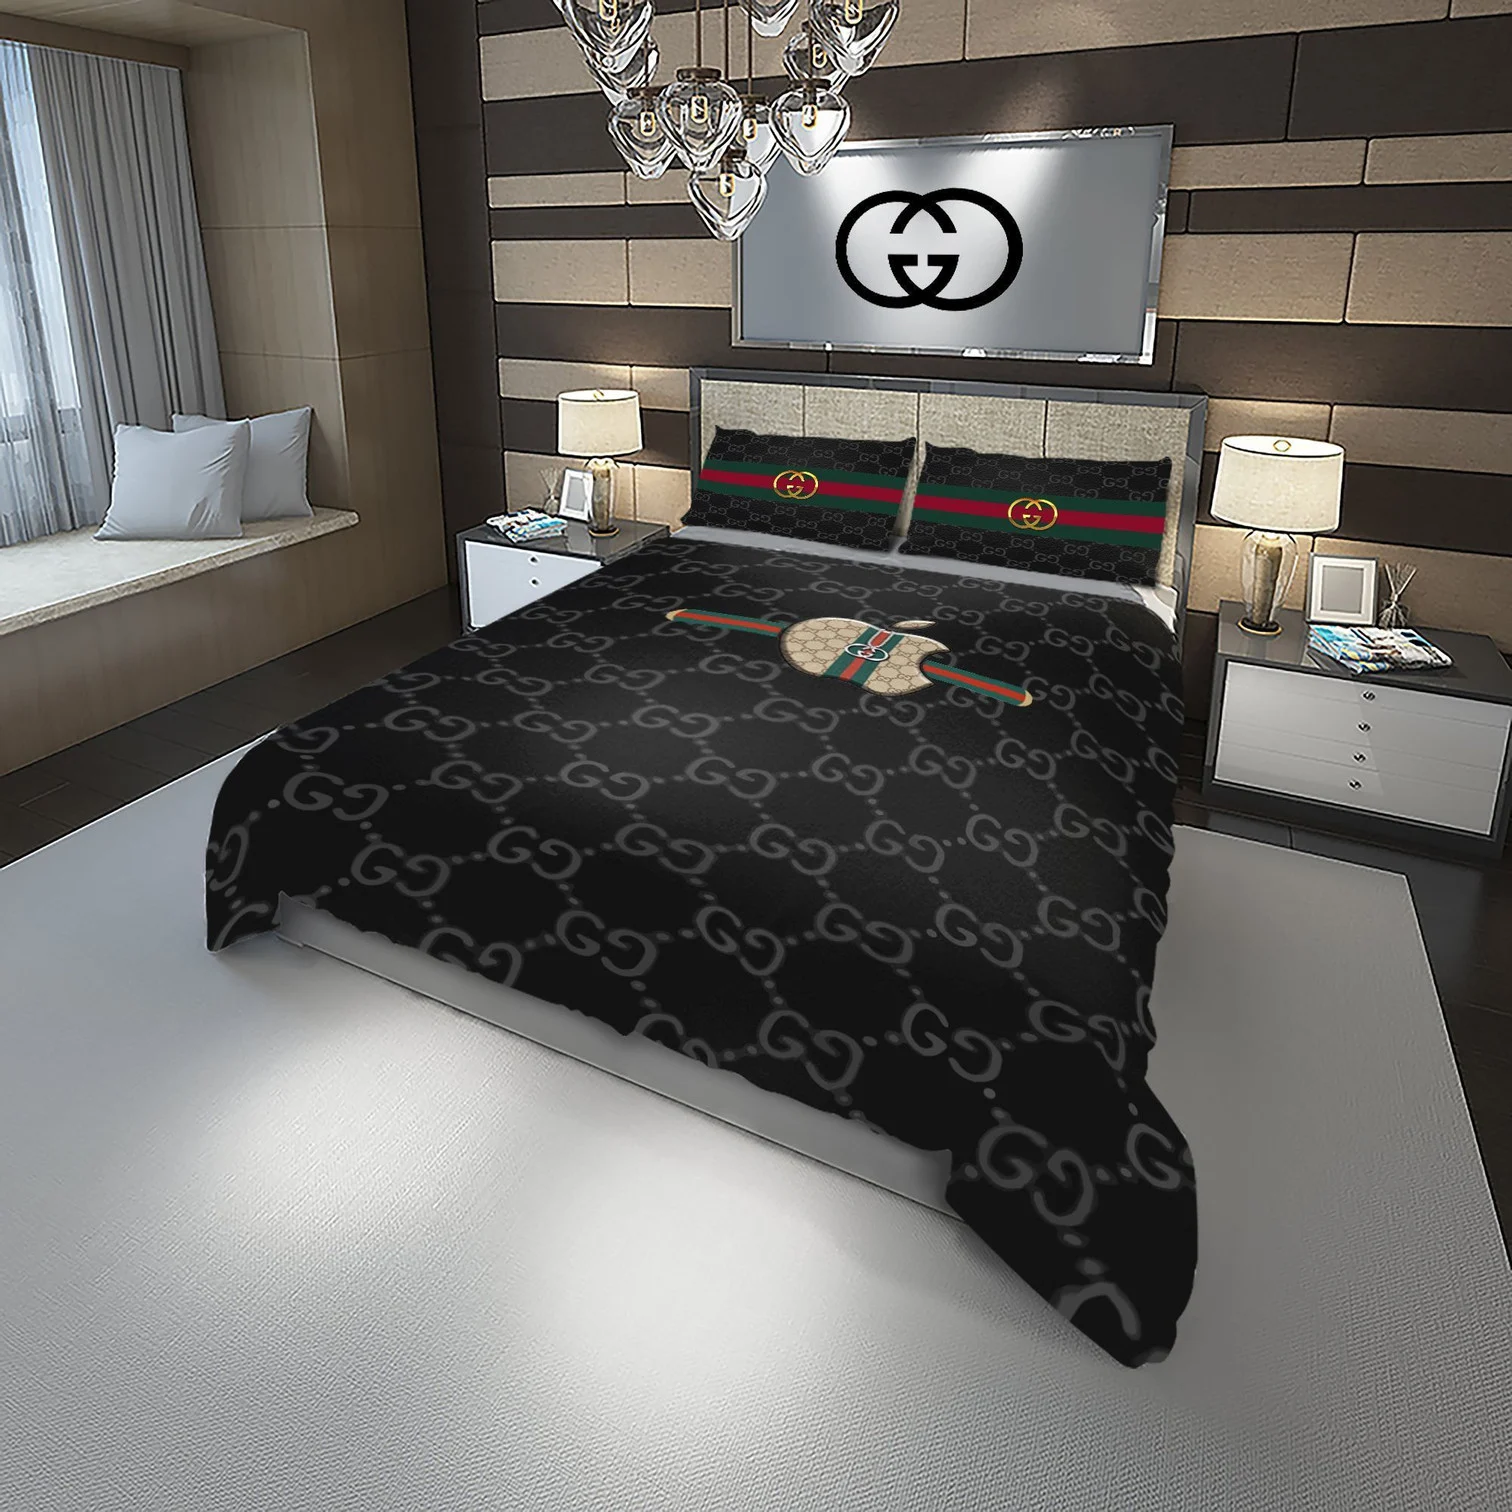 Gucci Apple Logo Brand Bedding Set Bedroom Home Decor Bedspread Luxury